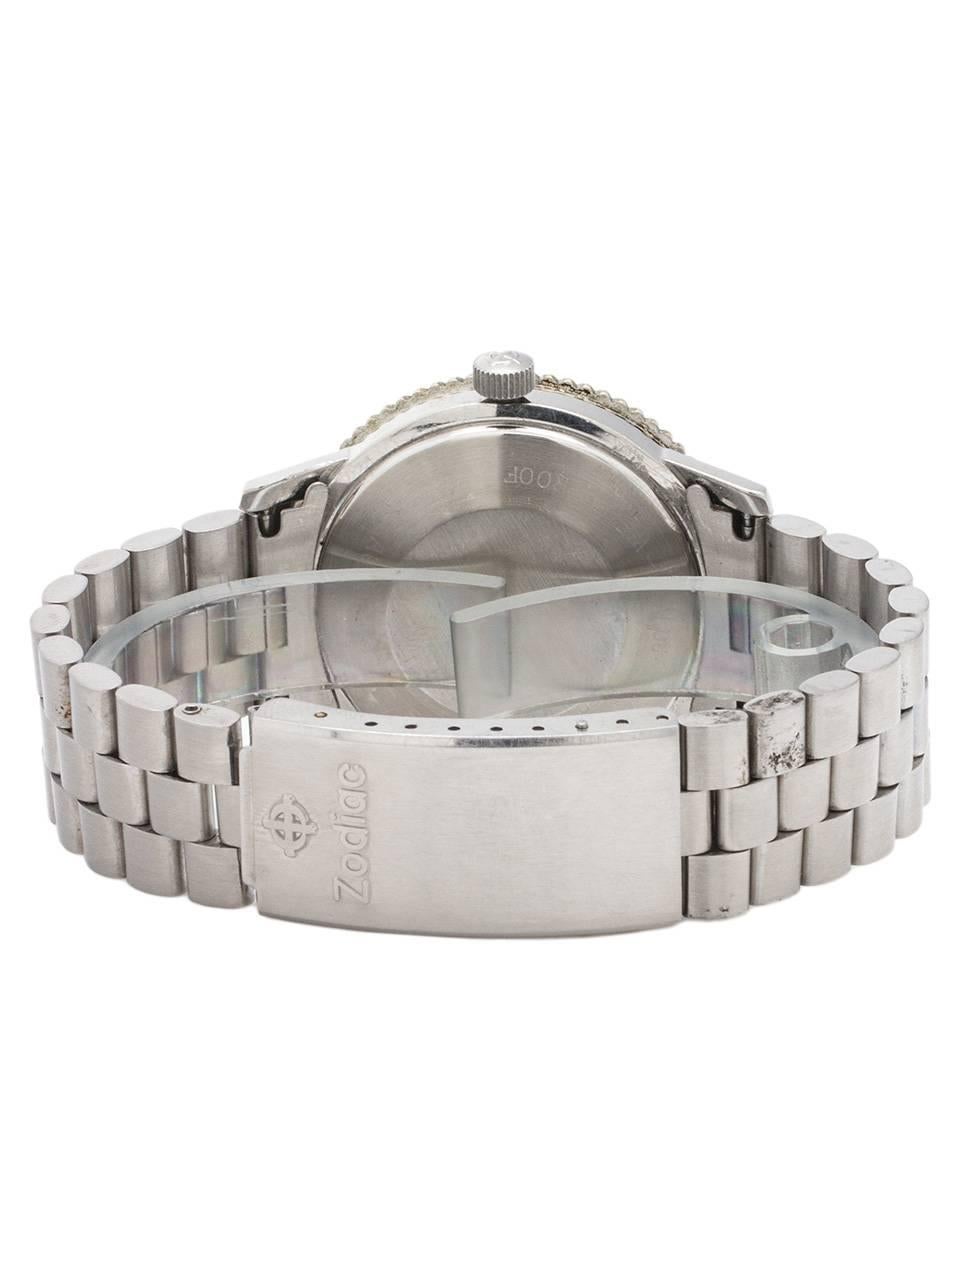 Men's Zodiac Stainless Steel Aerospace GMT Automatic wristwatch, circa 1960s